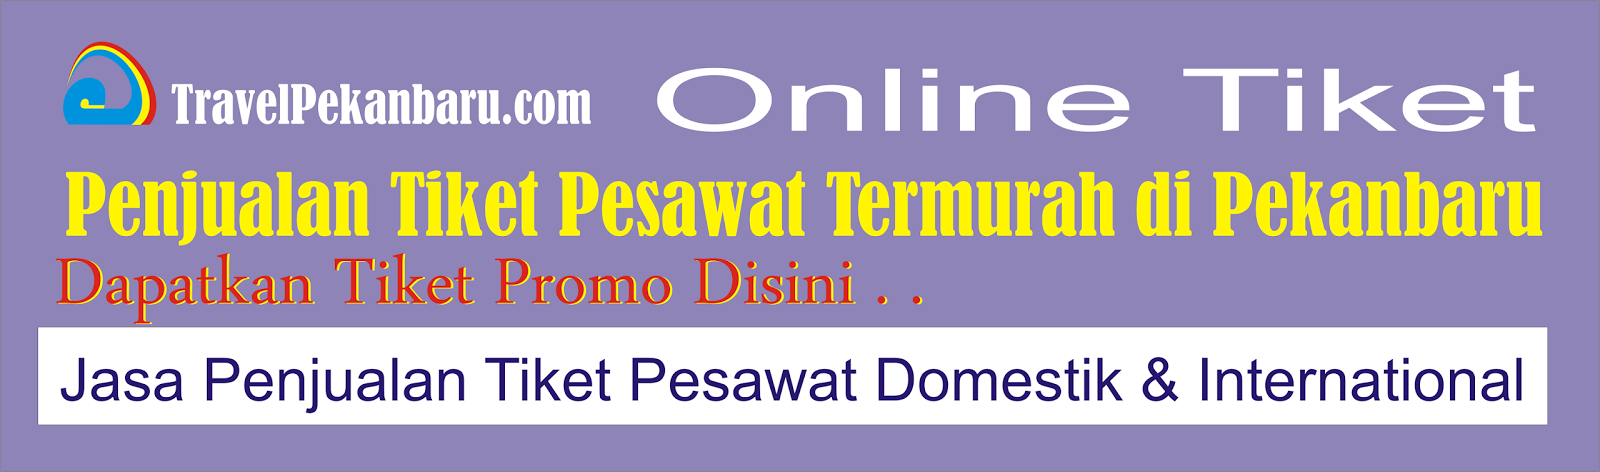 Travelpekanbaru Com Jual Tiket Pesawat Pku Jkt Travel Pekanbaru